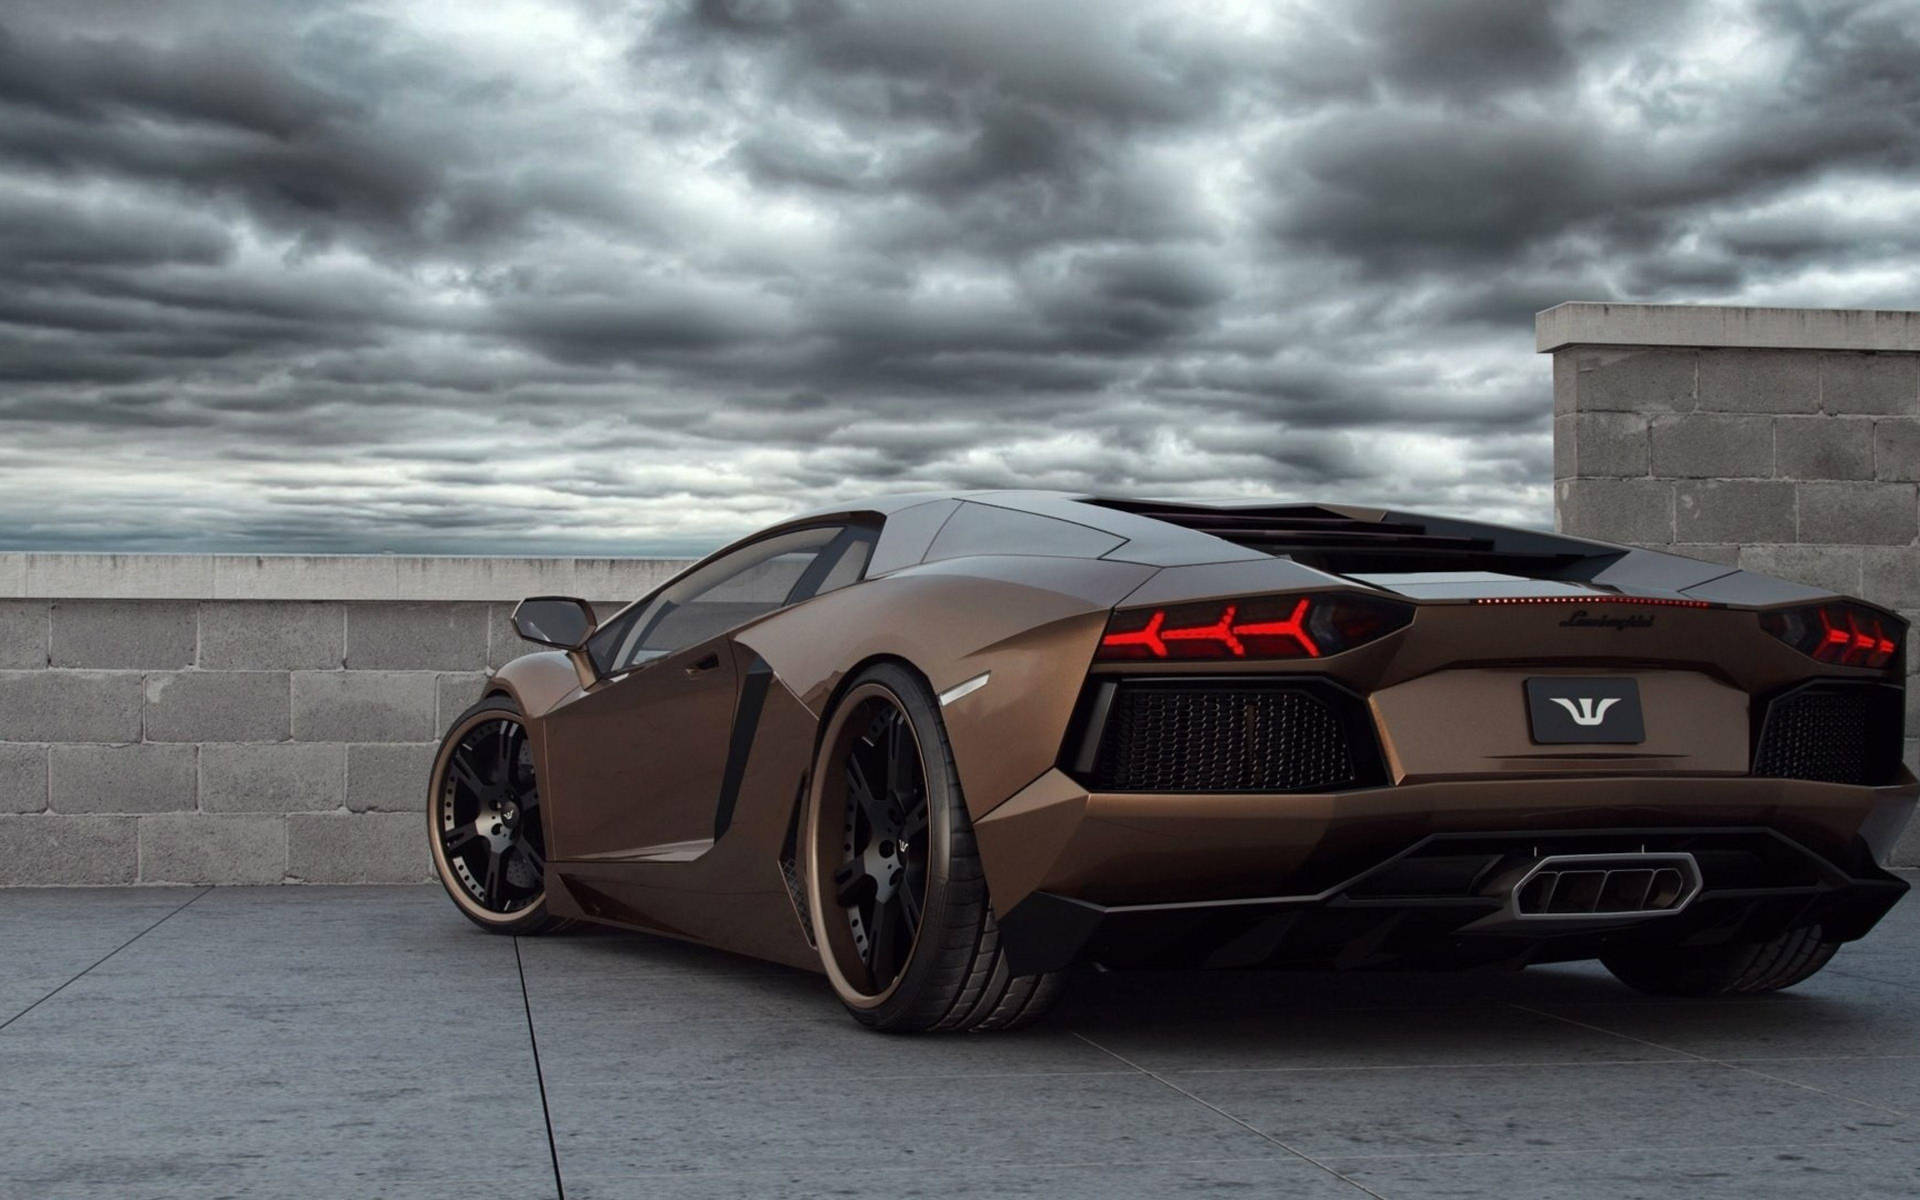 Cool Cars: Sleek Brown Lamborghini Background